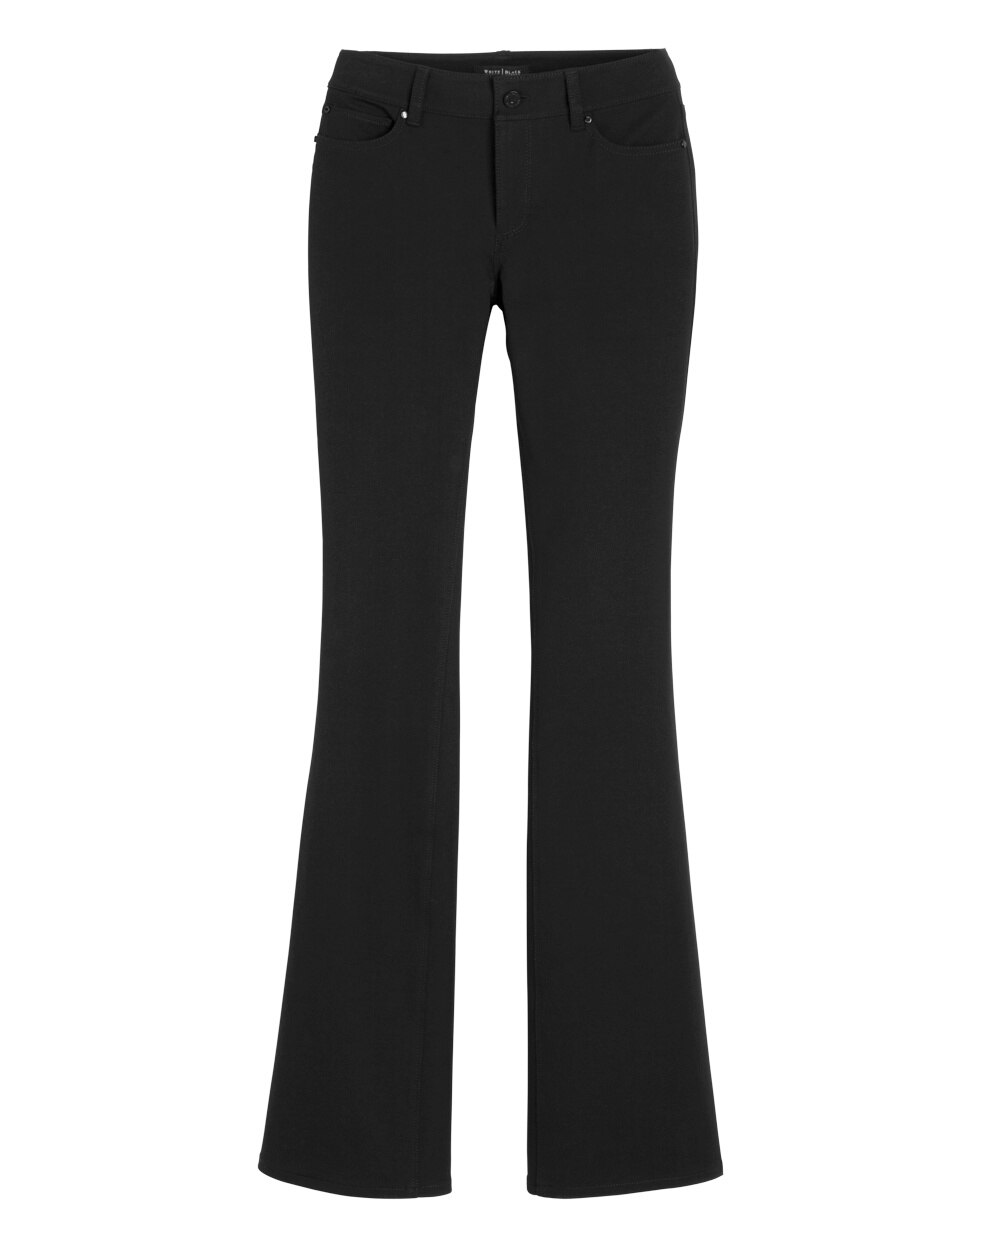 Premium Bi-Stretch Skinny Flare Pants - White House Black Market